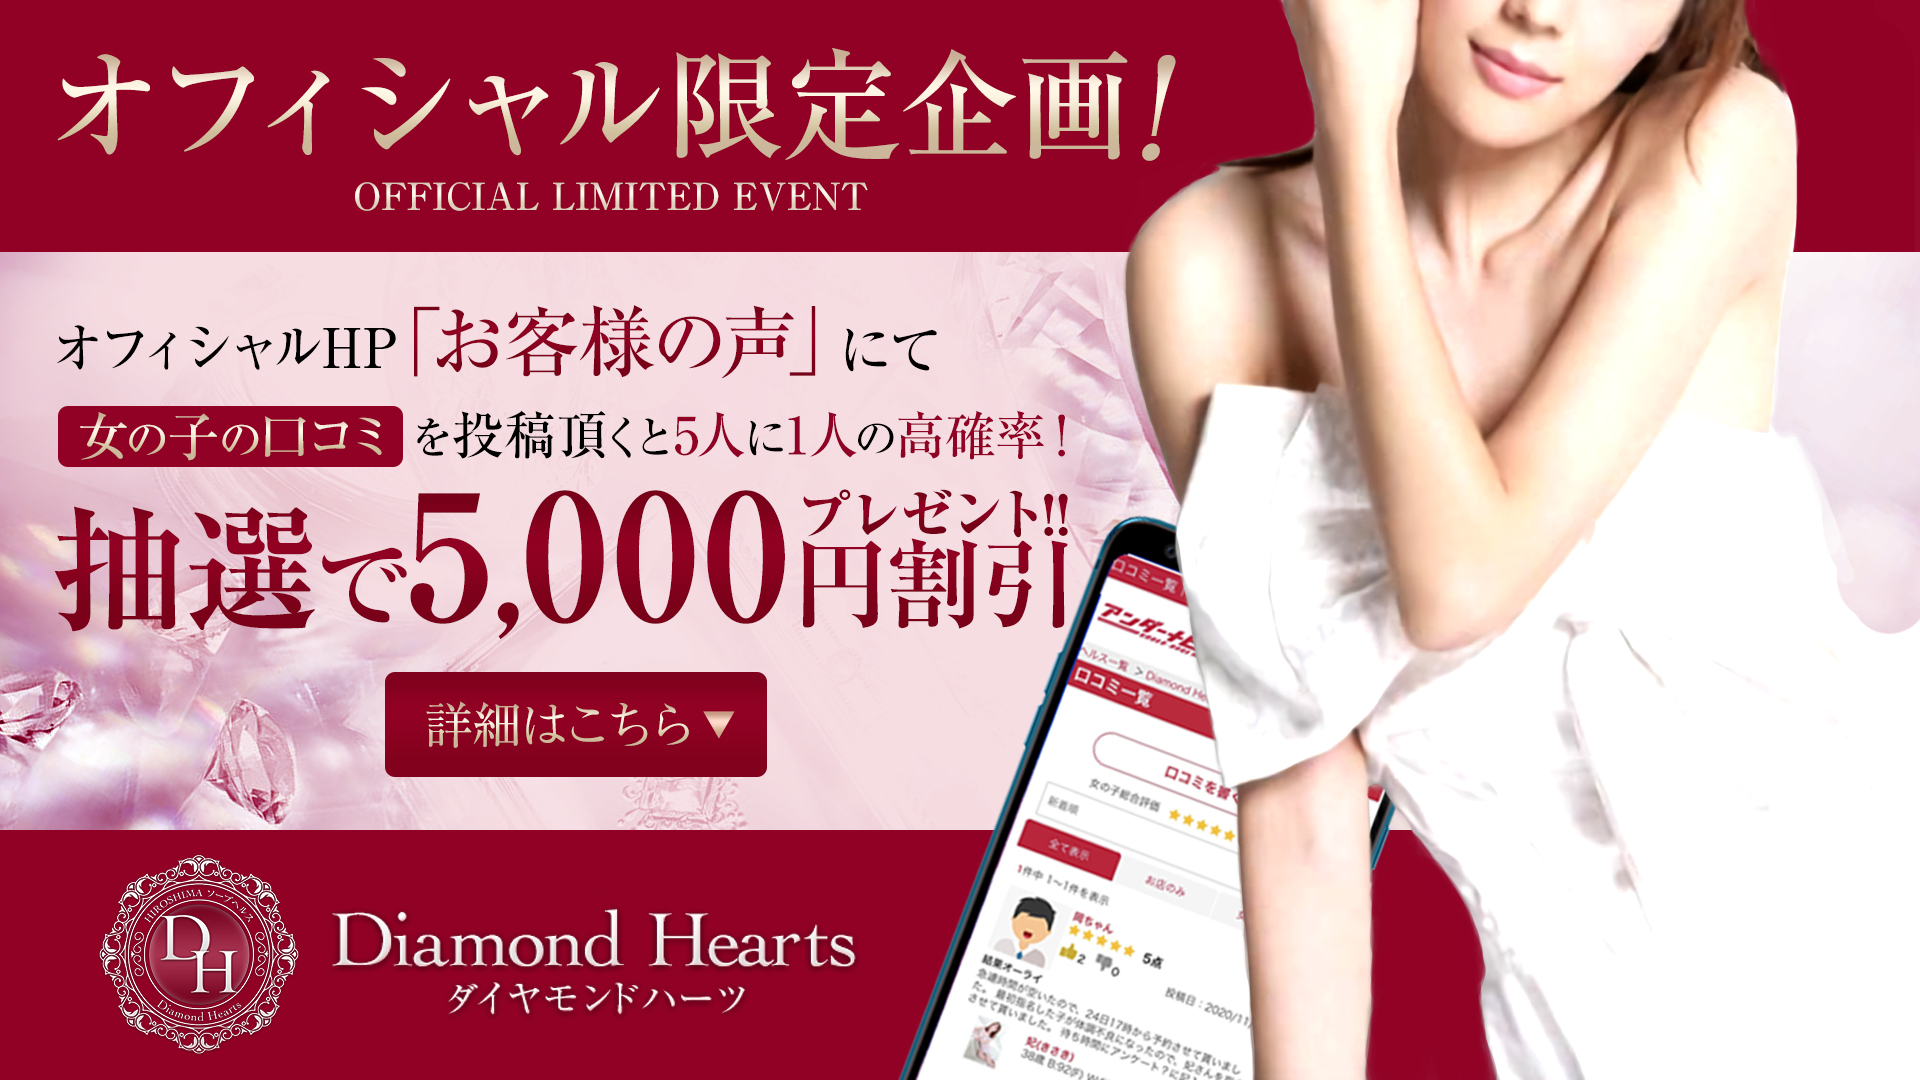 Diamond Hearts(ダイヤモンドハーツ)（広島市ソープ）